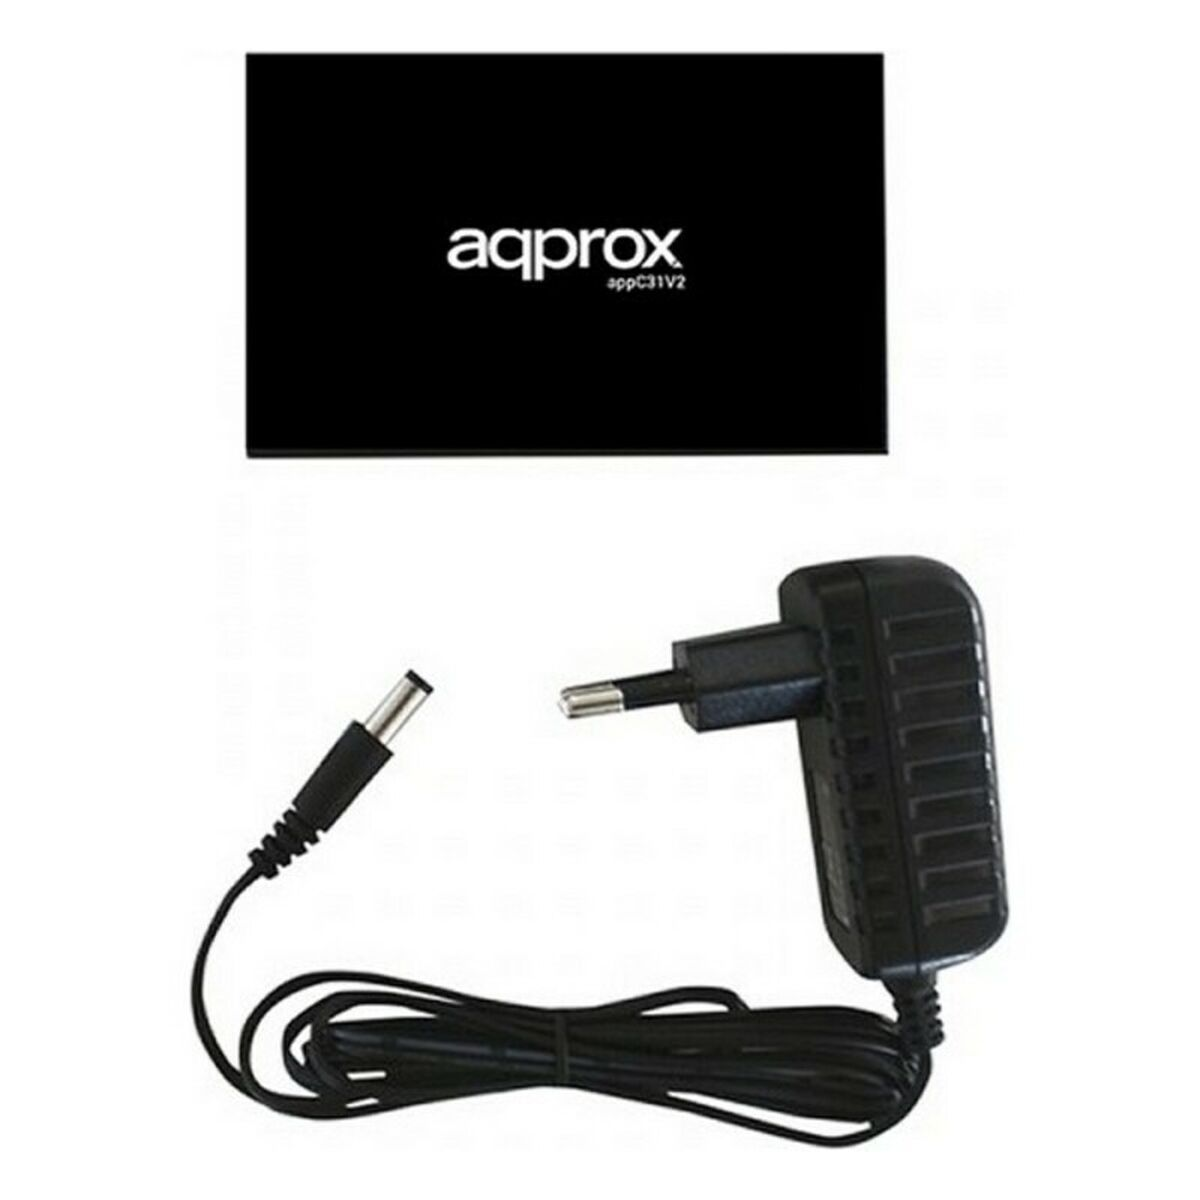 AV-Adapter/Konverter cm APPC31V2 15 APPROX